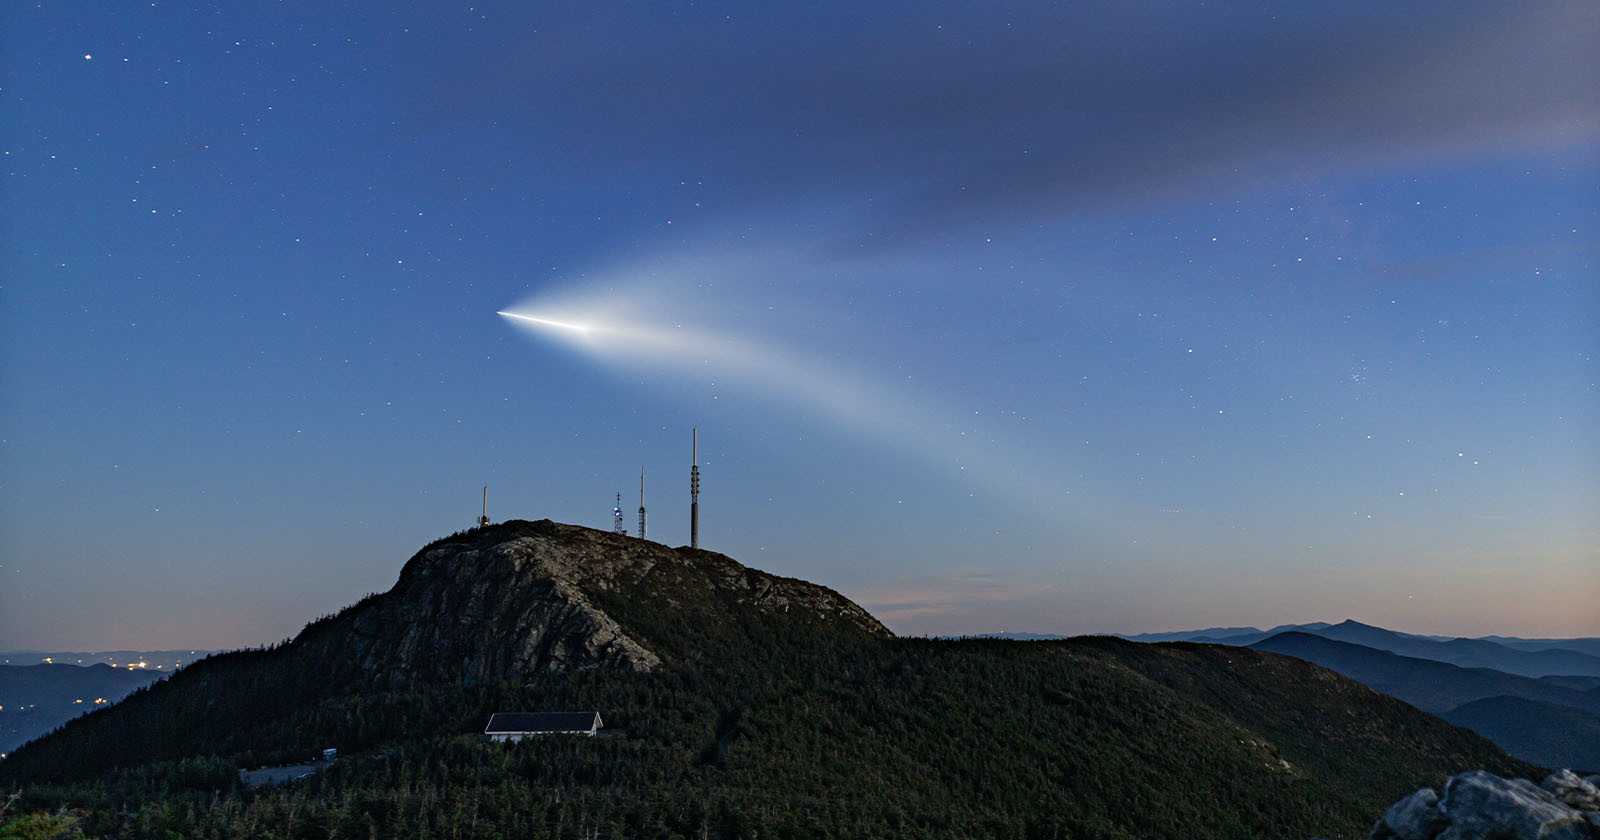  photographer shocked spacex rocket flies through his shot 